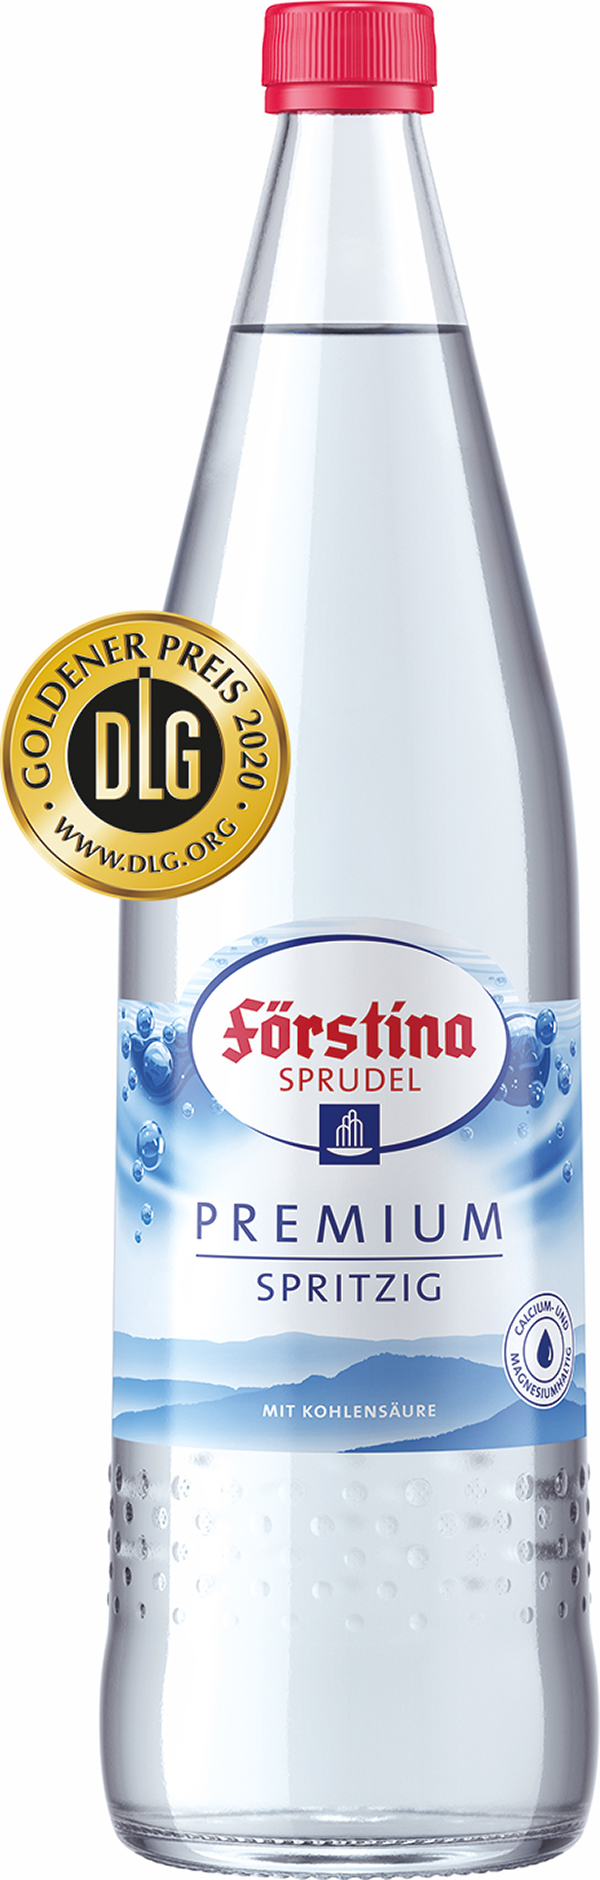 Förstina Sprudel Premium Spritzig 12 x 0,7 l (Glas)